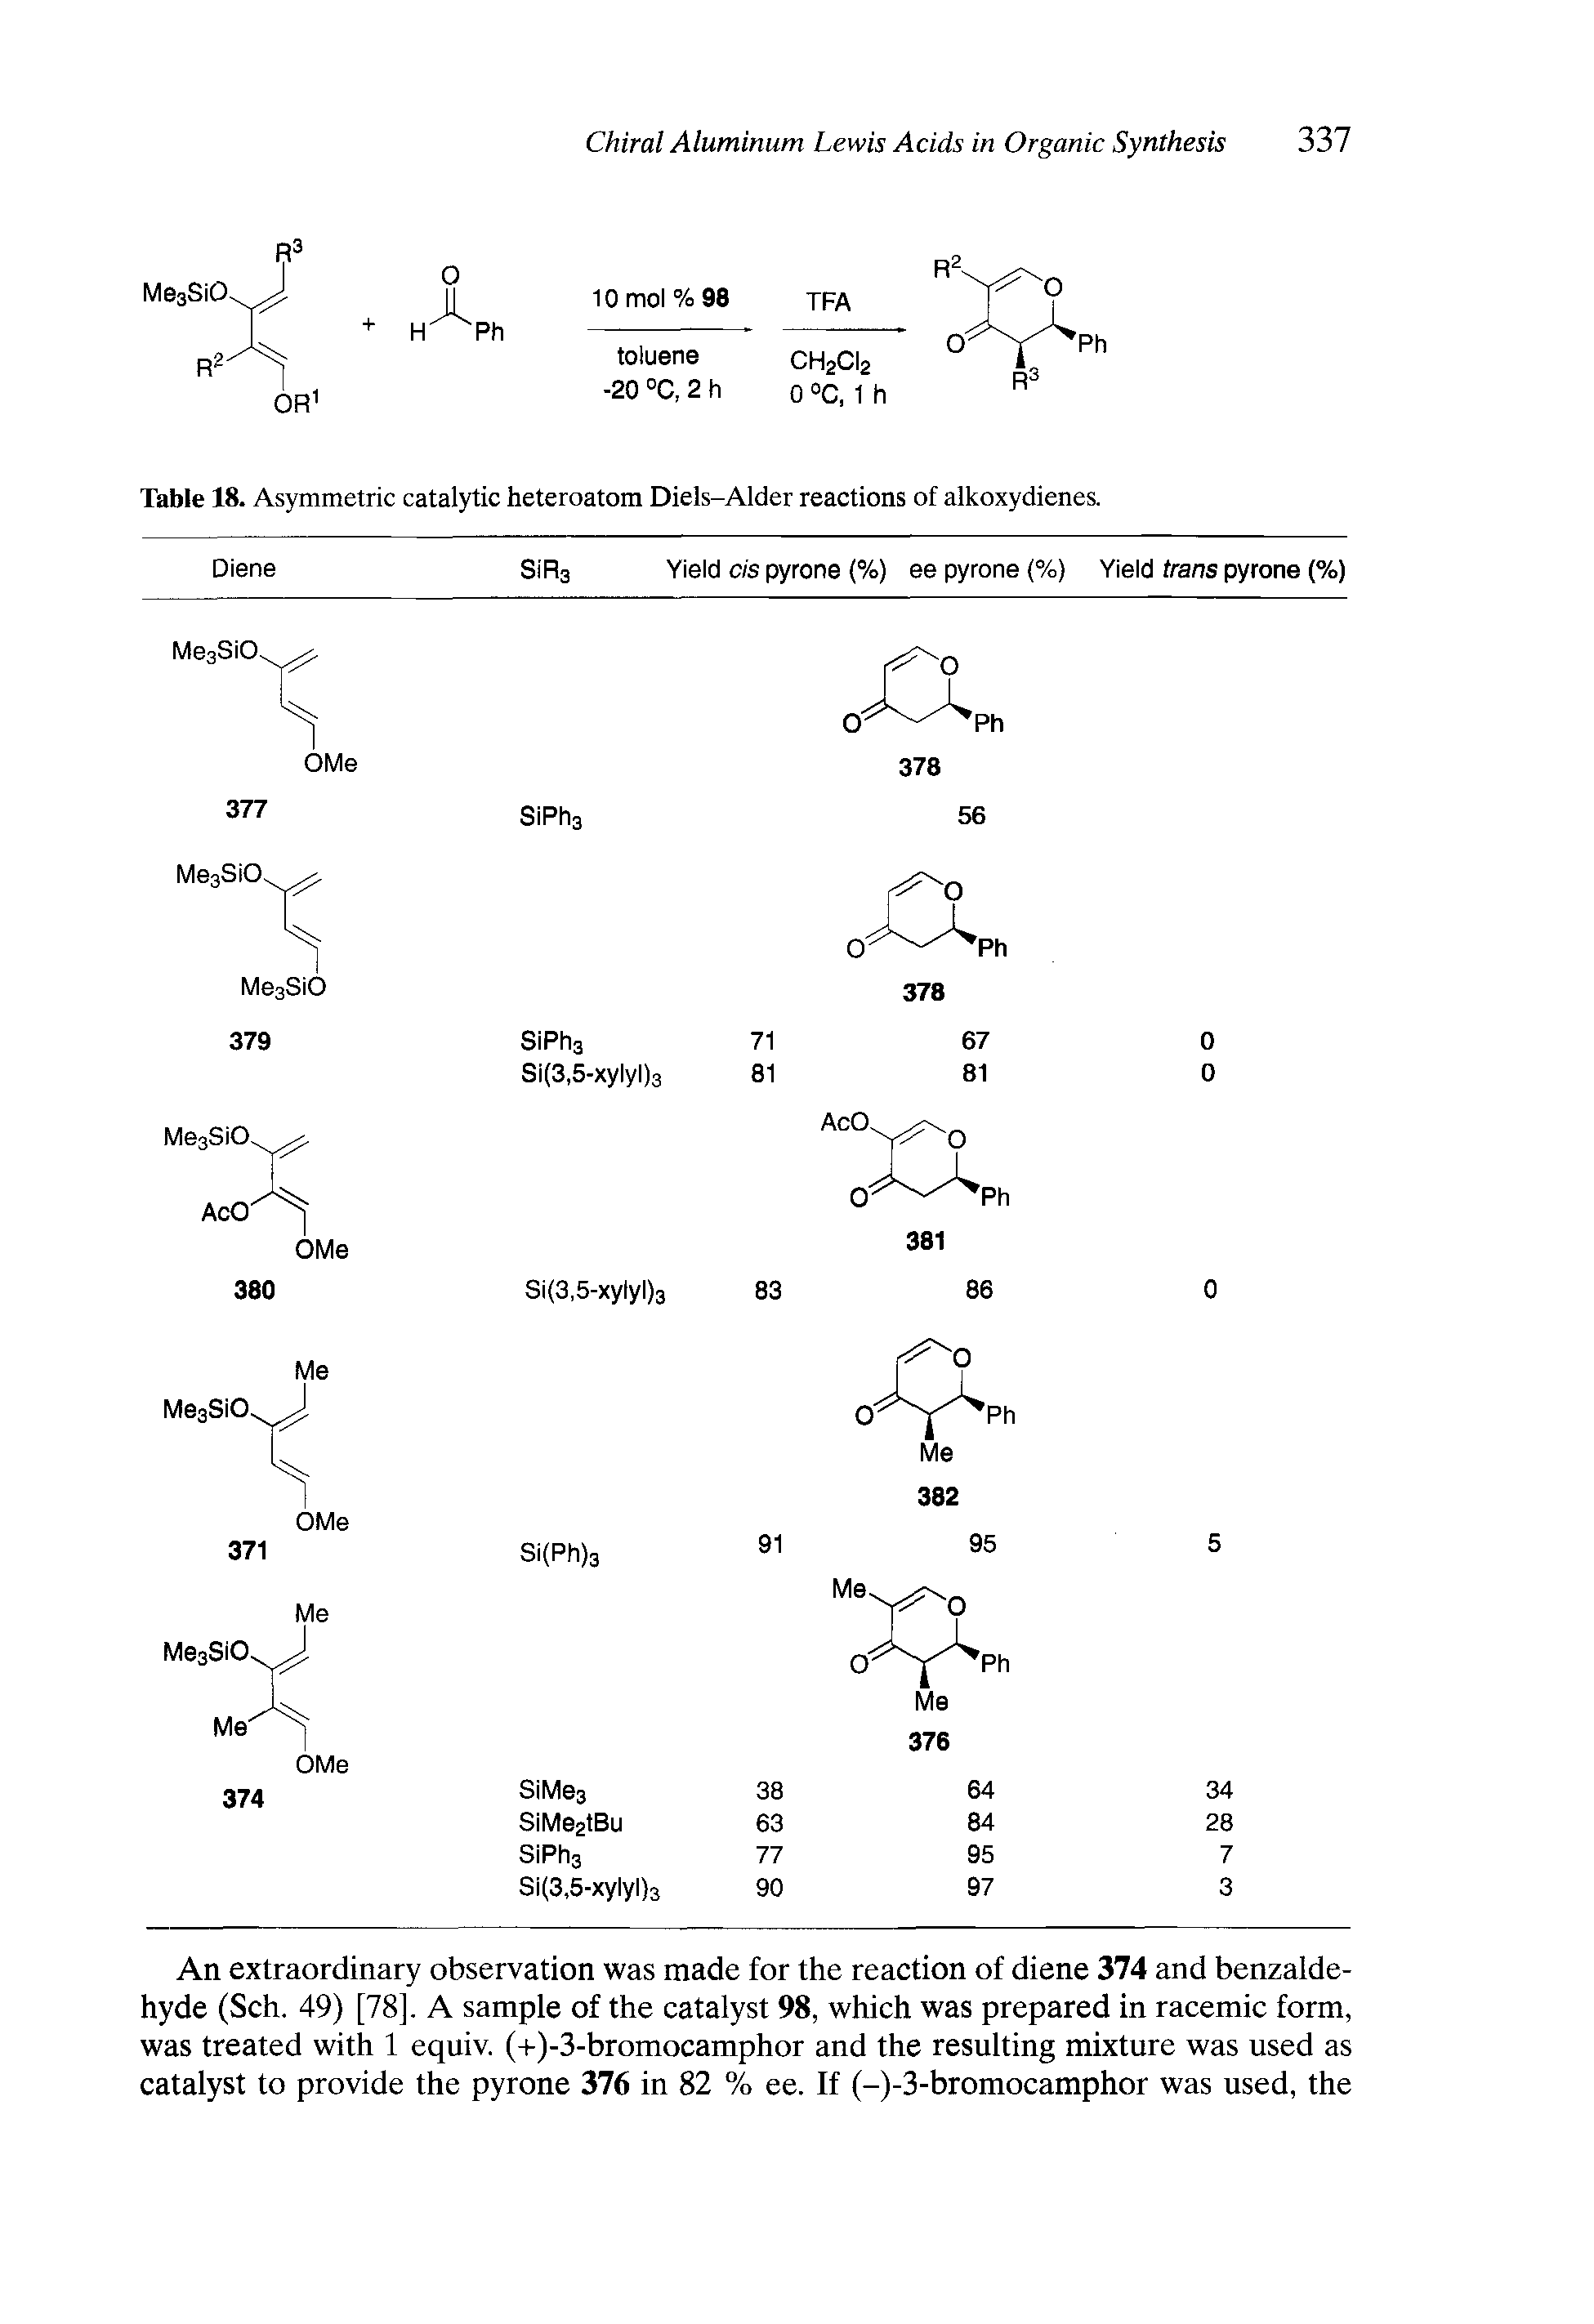 Table 18. Asymmetric catalytic heteroatom Diels-Alder reactions of alkoxydienes.